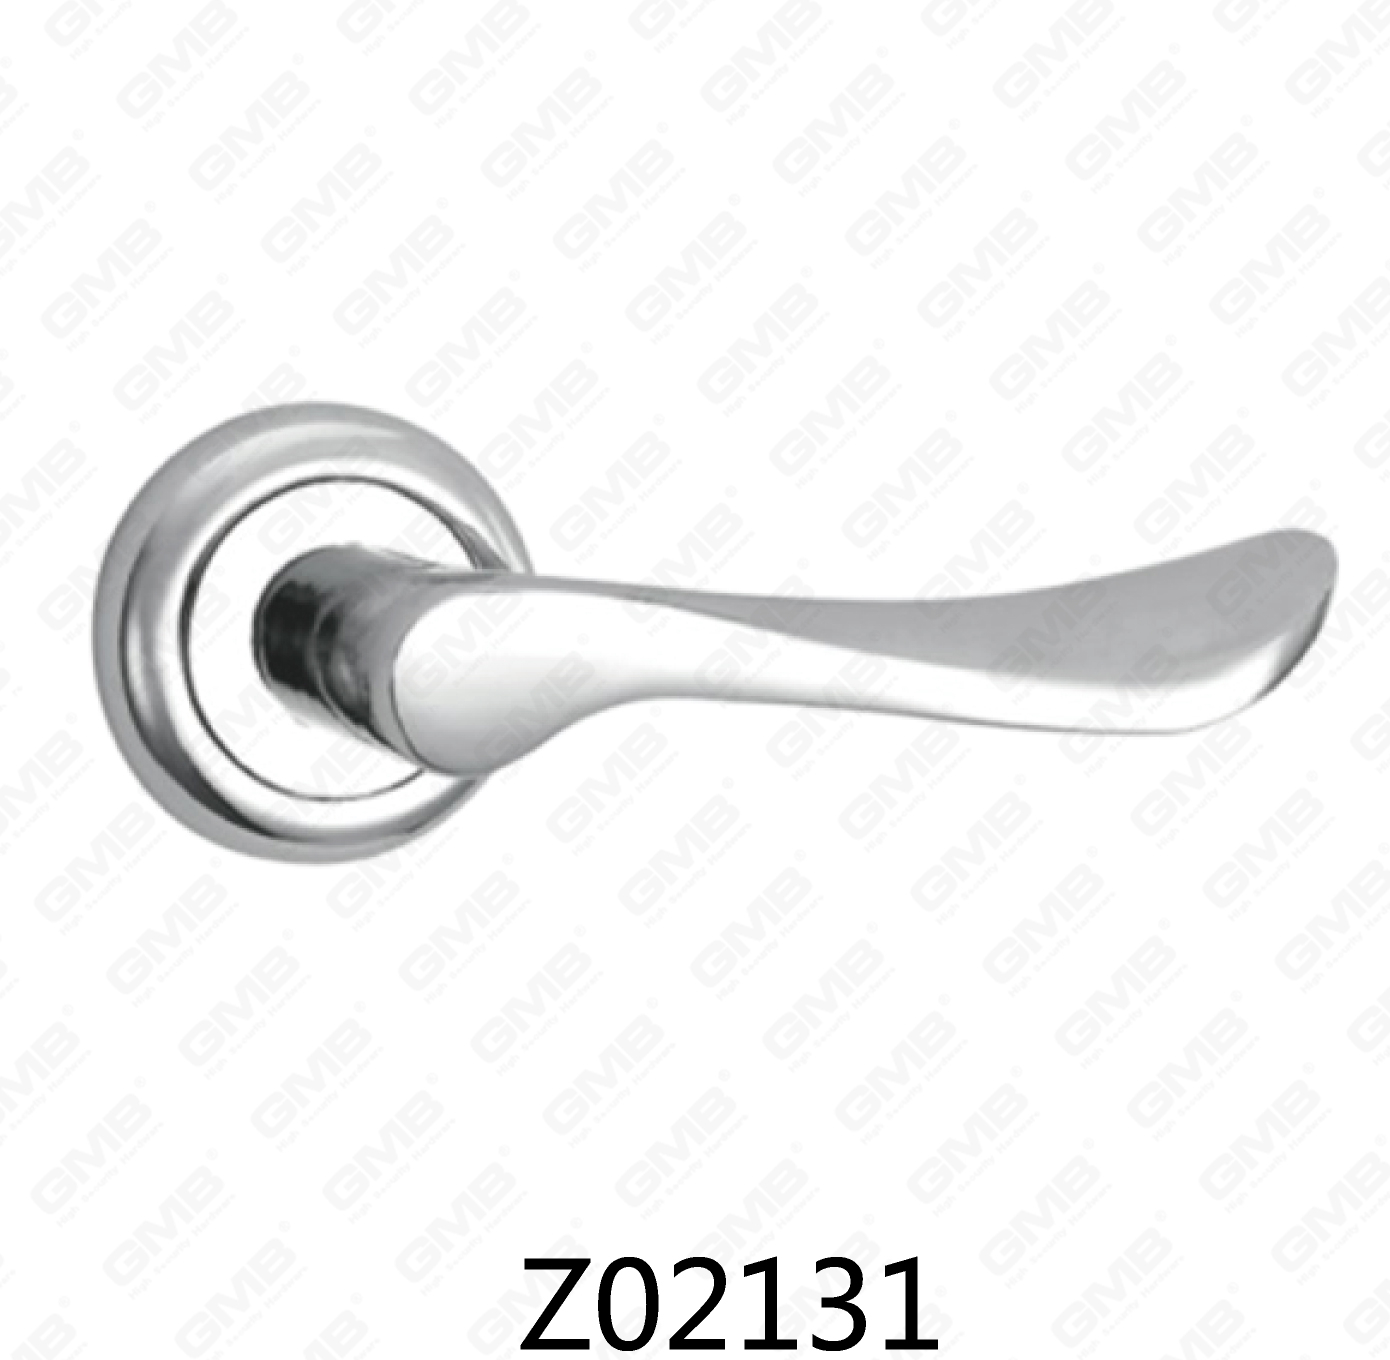 Manija de puerta de roseta de aluminio de aleación de zinc Zamak con roseta redonda (Z02131)